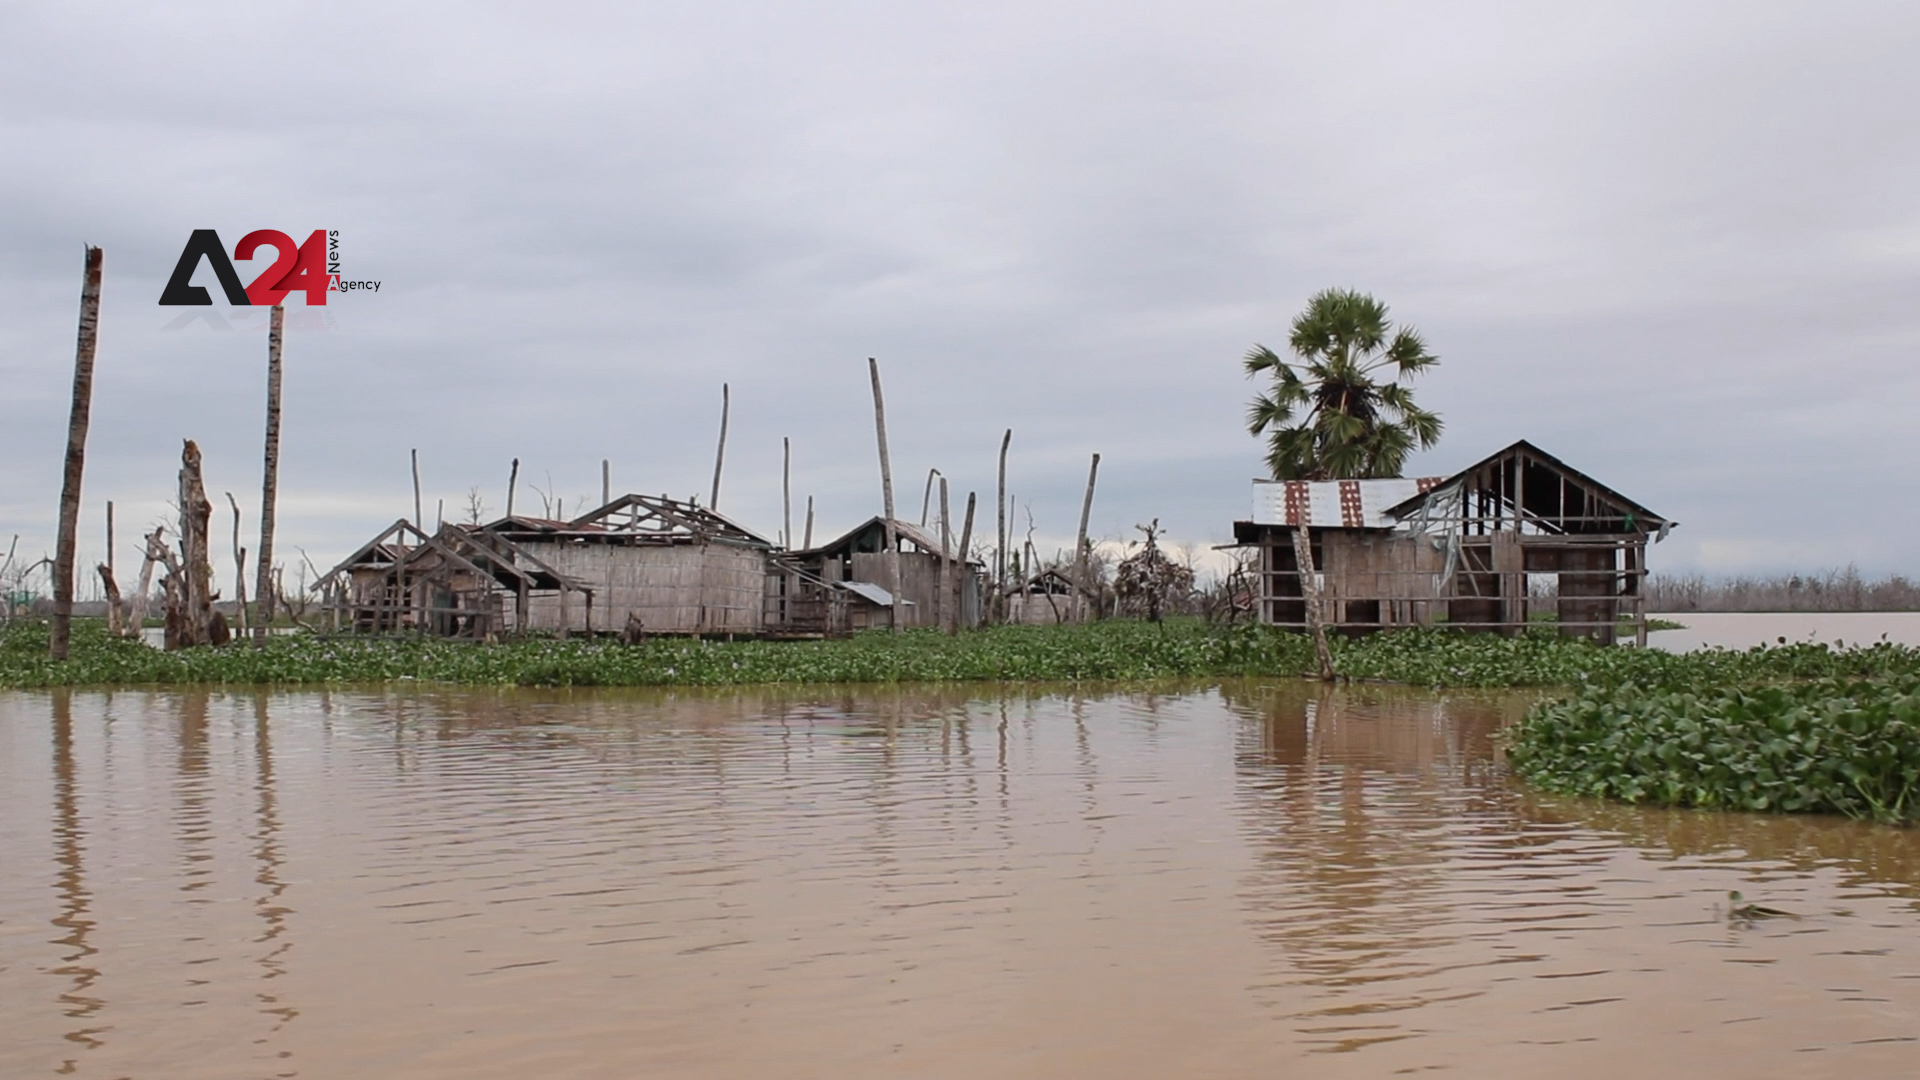 Cambodia – Four years into its establishment, ‘Lower Sesan 2 dam’ still causes suffering